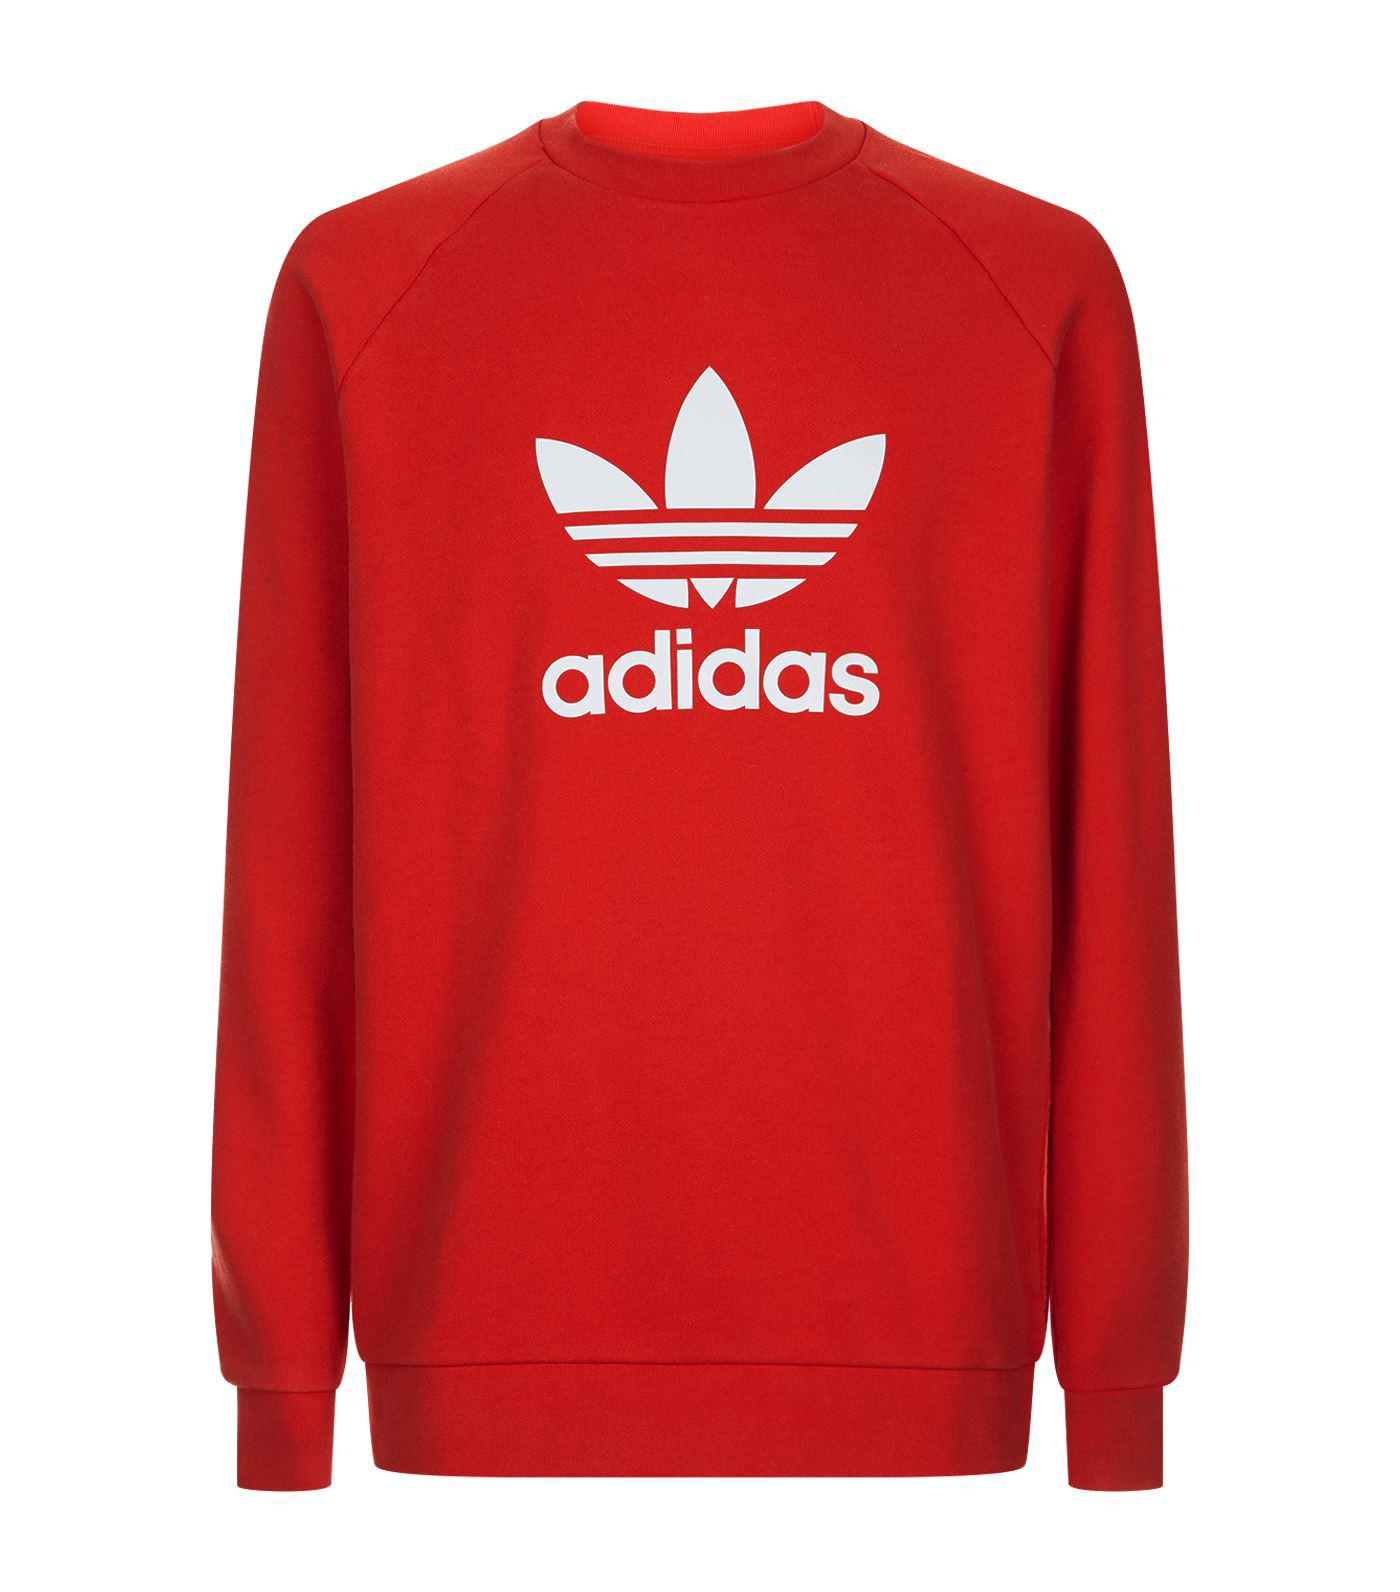 Lyst - Adidas Originals Trefoil Crew Neck Sweatshirt in Red for Men